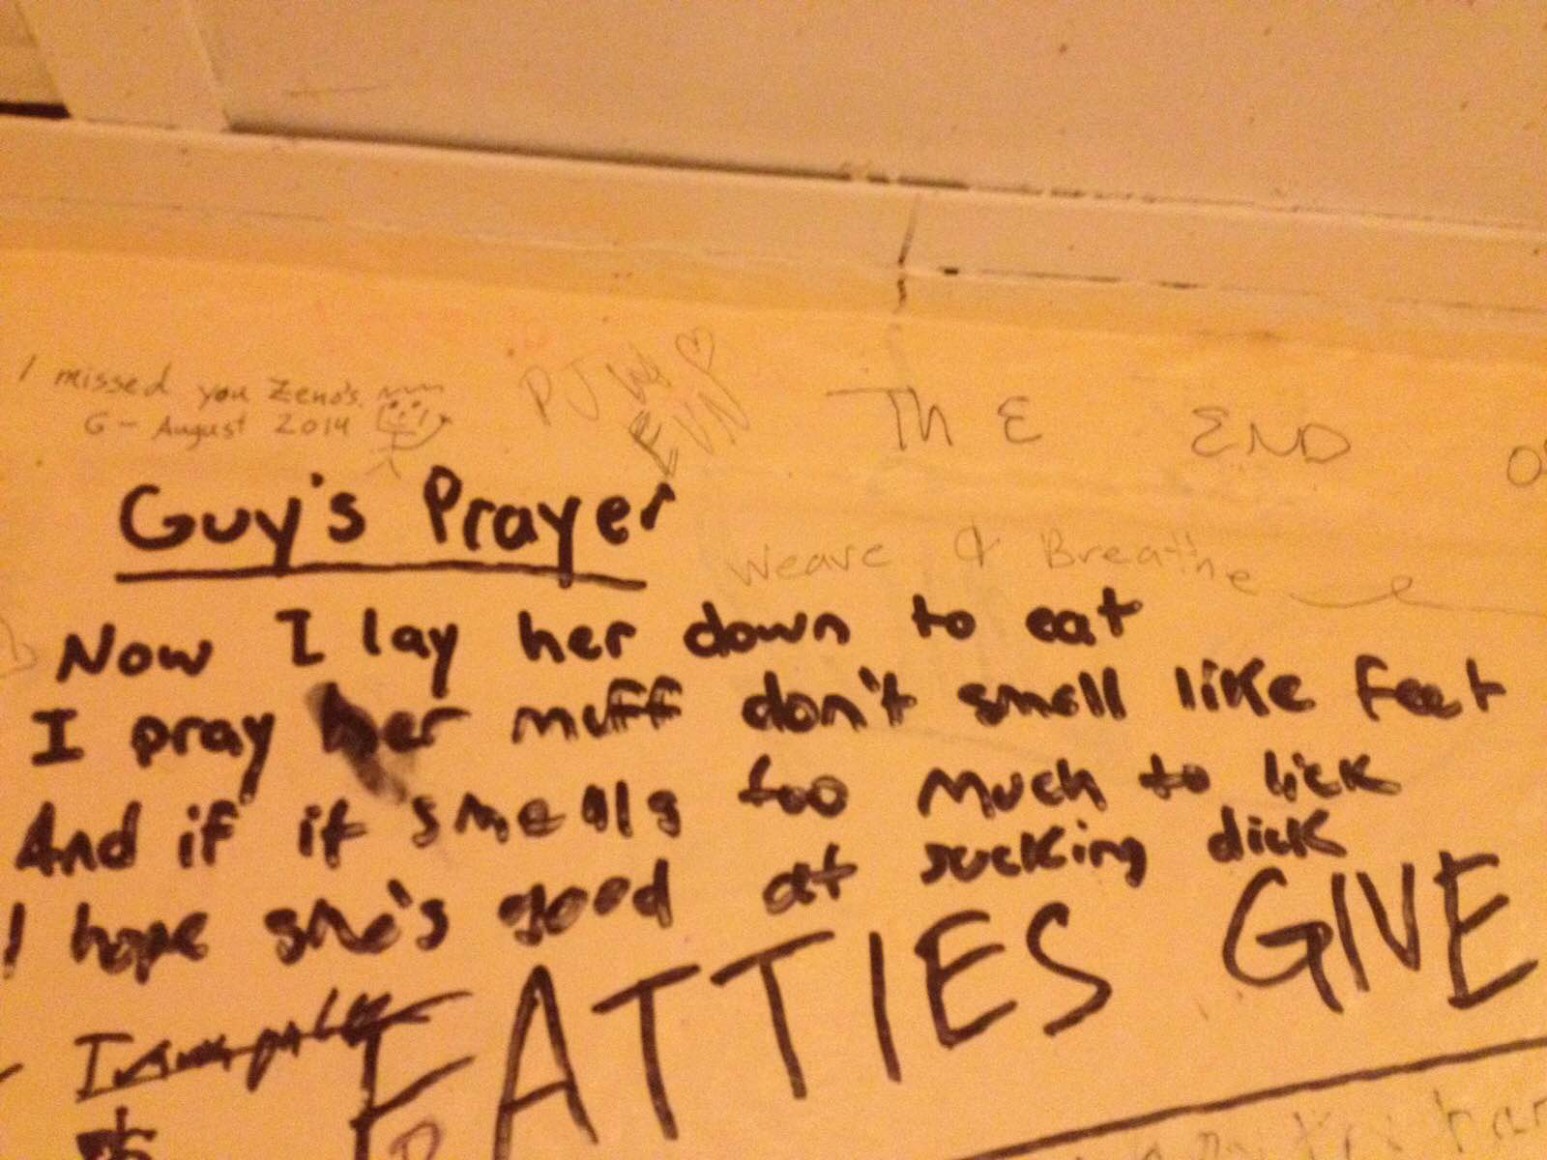 Guy's Prayer